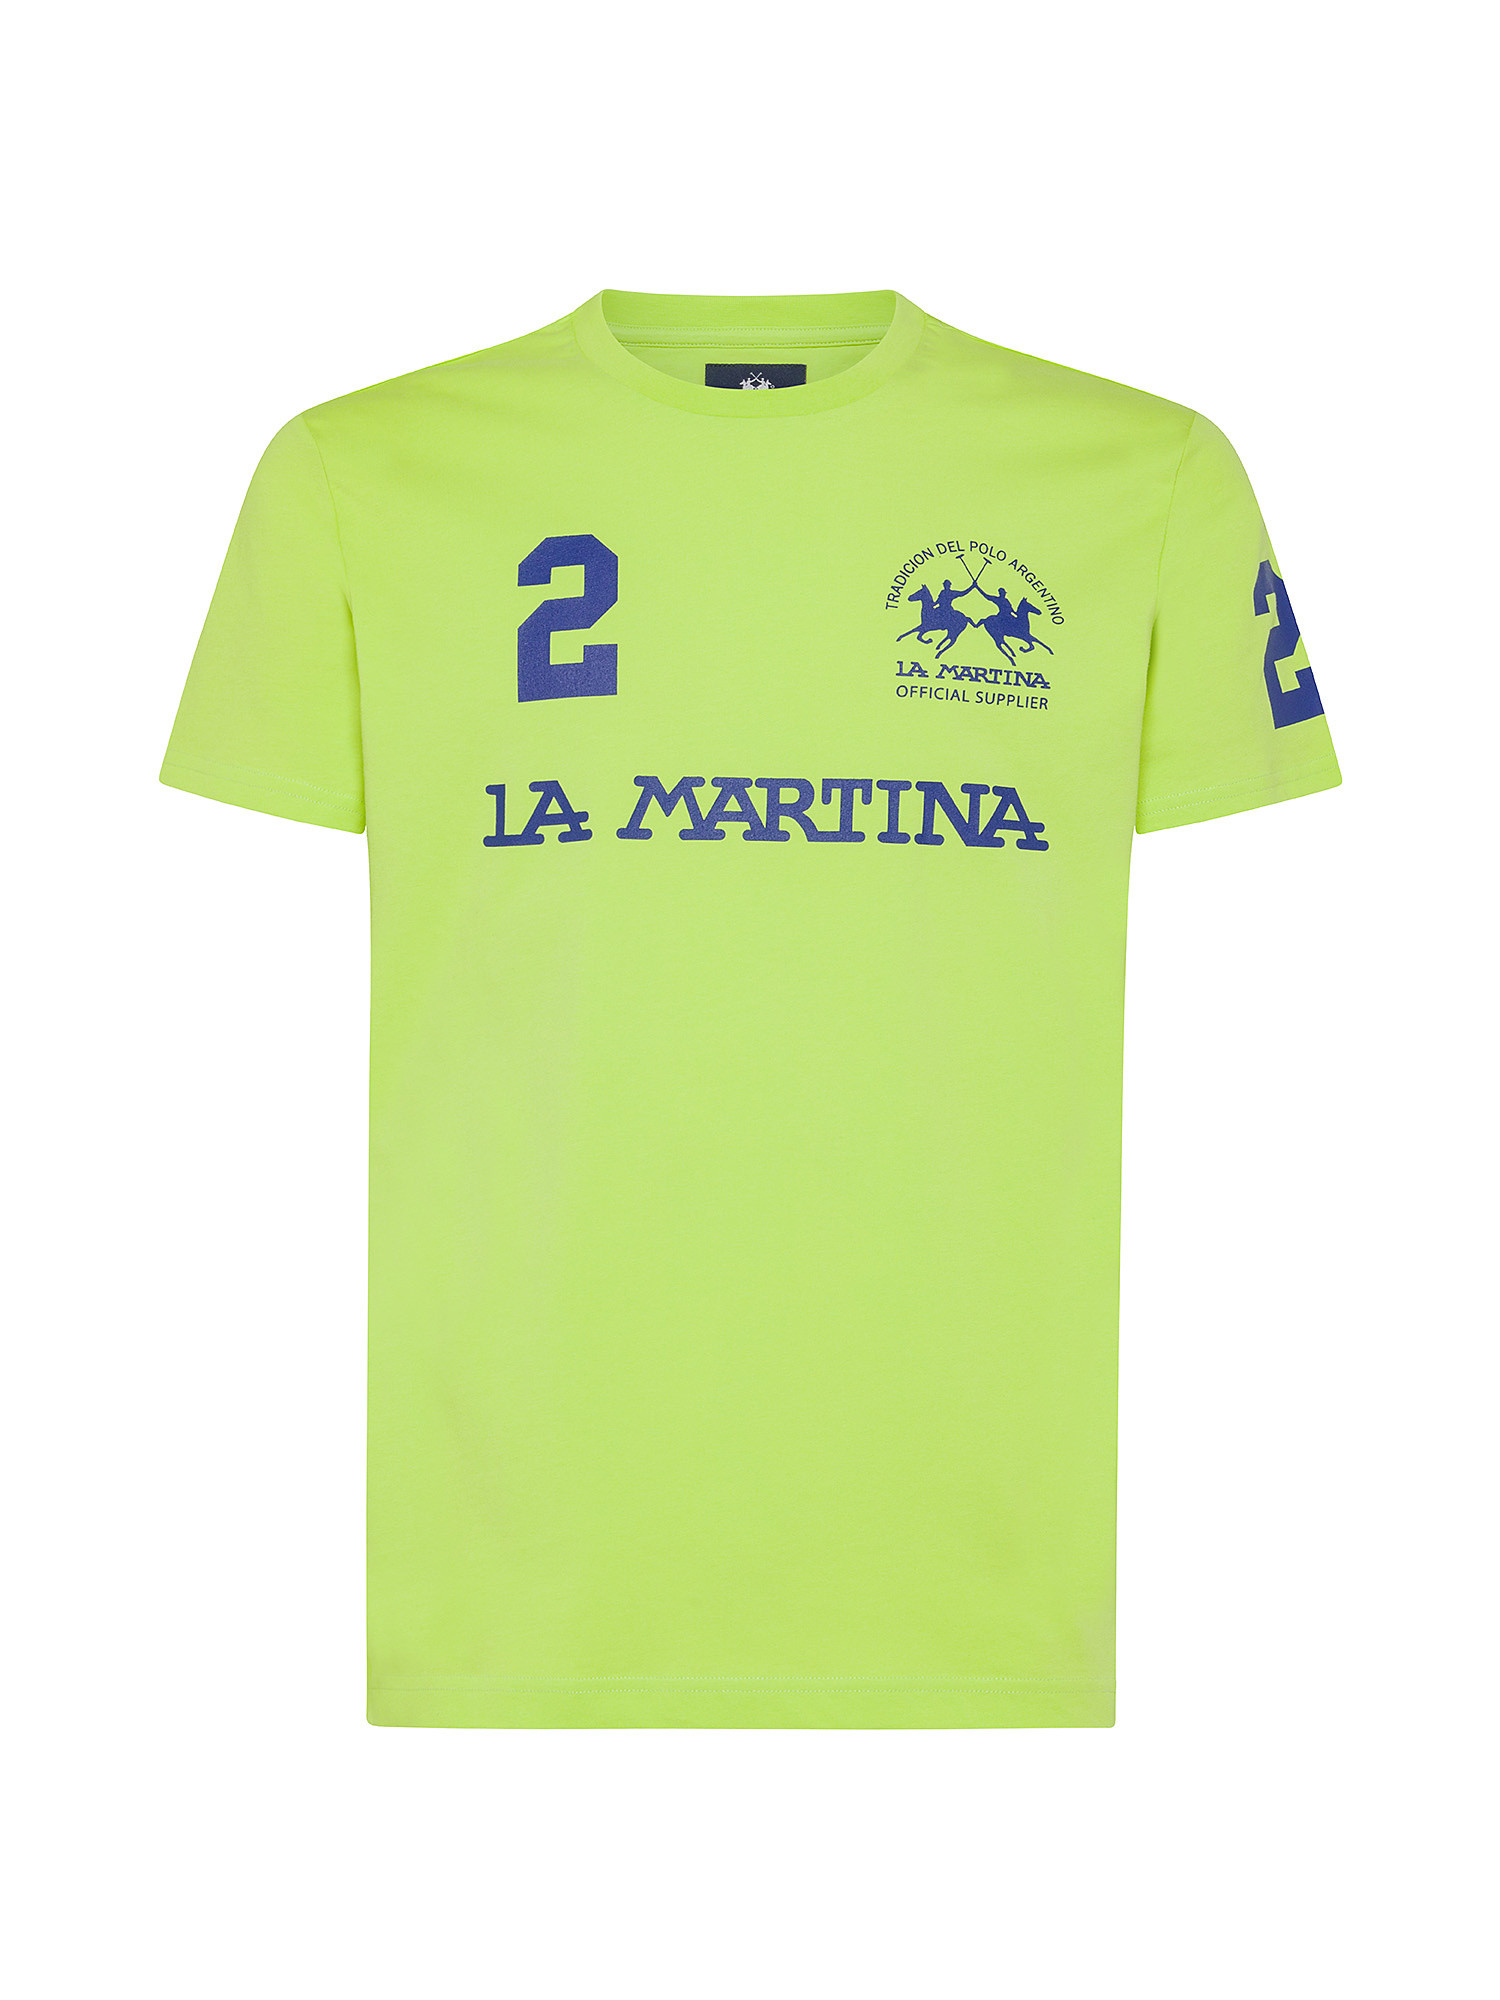 La Martina - T-shirt maniche corte in cotone jersey, Giallo, large image number 0